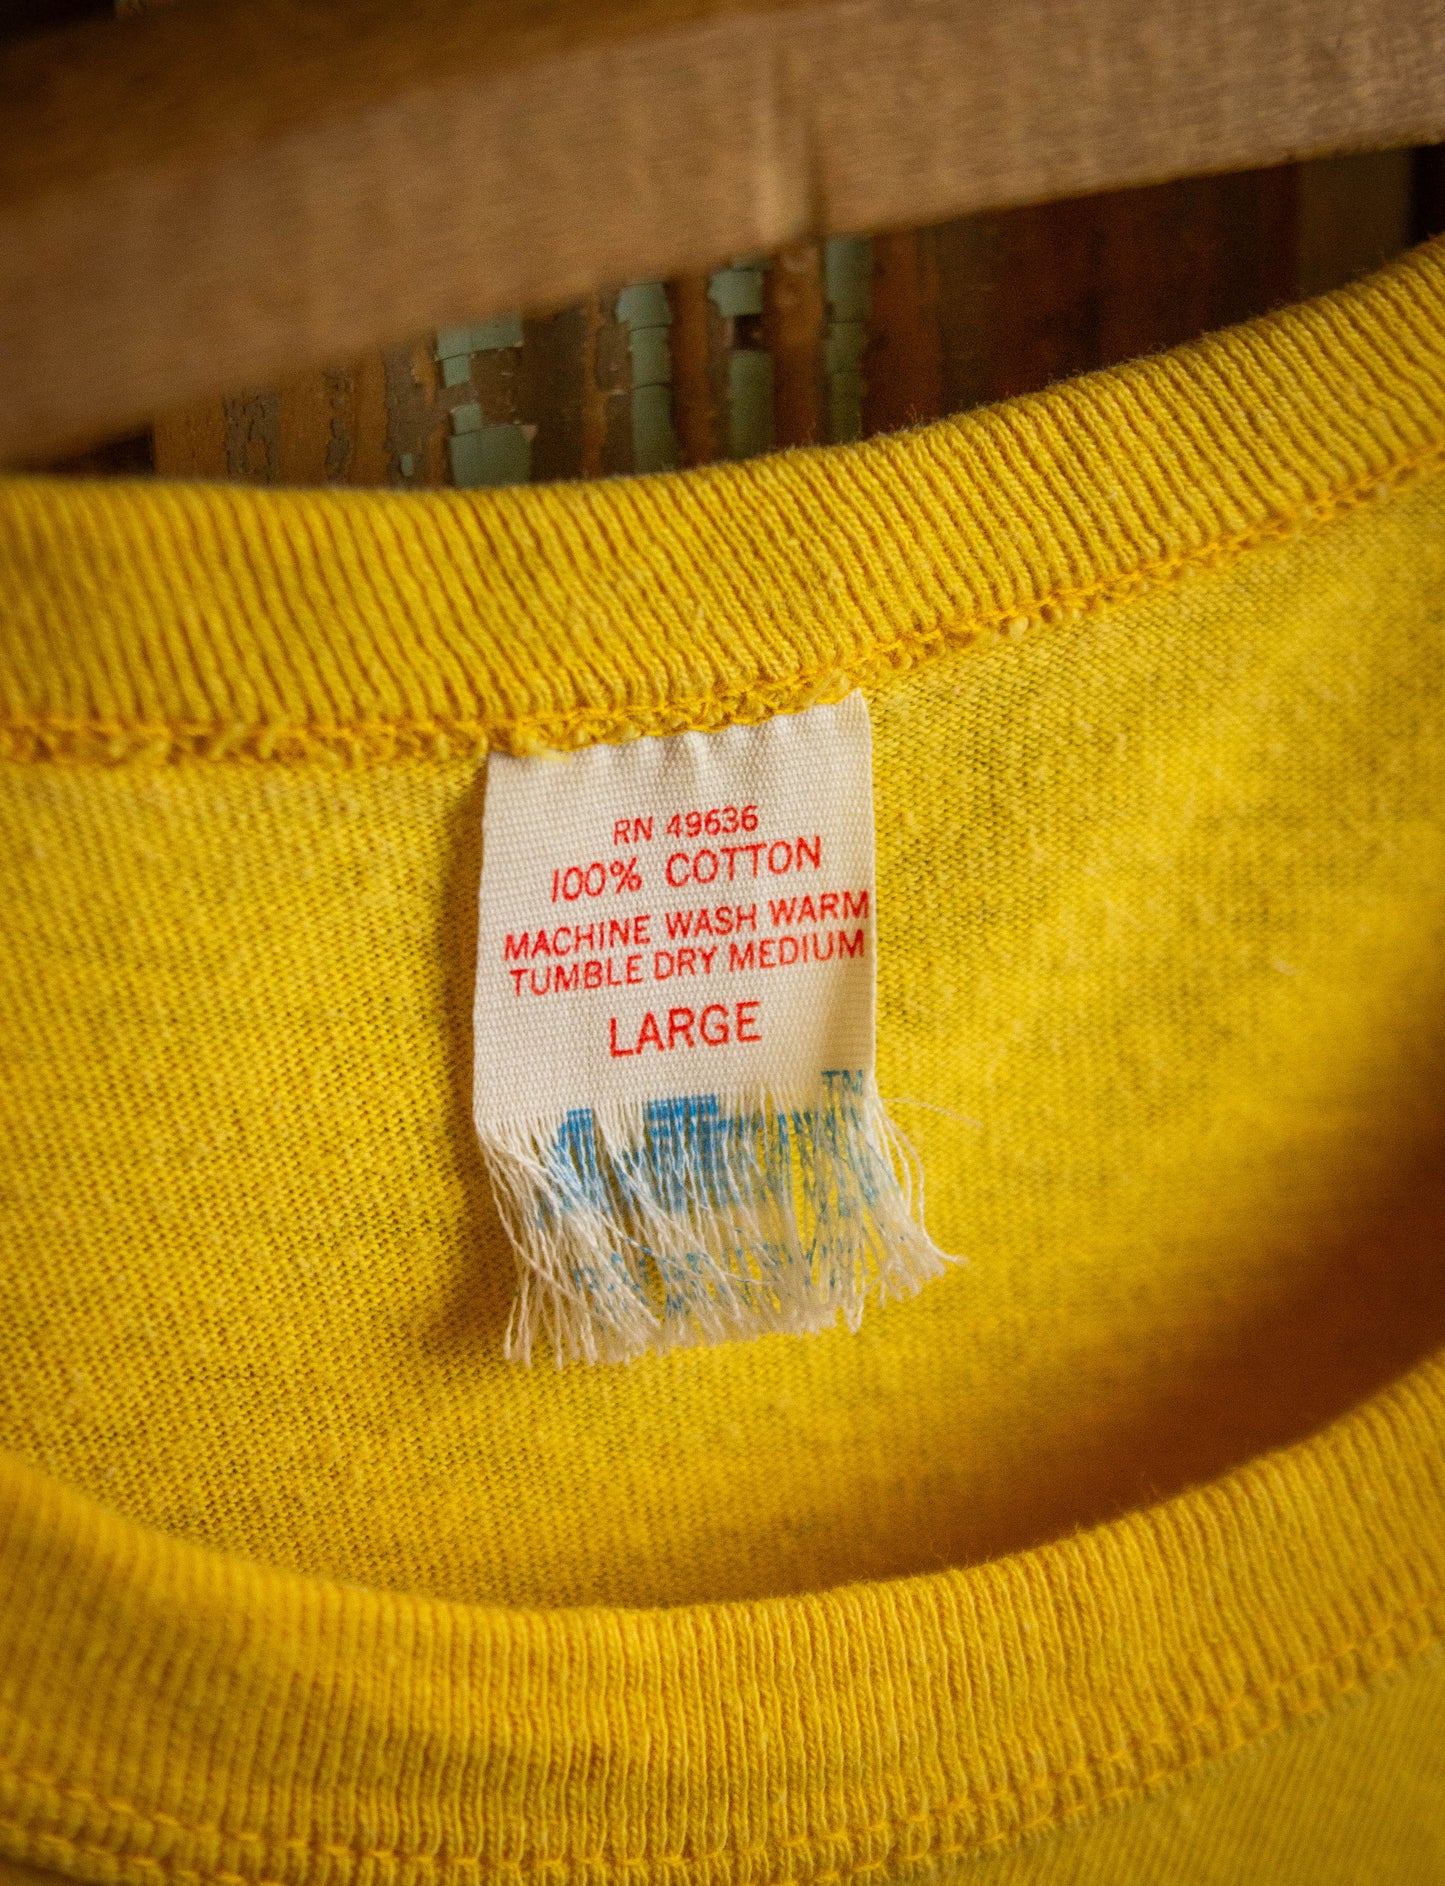 Vintage Beatles Away With Words Bootleg T Shirt 70s Yellow Medium